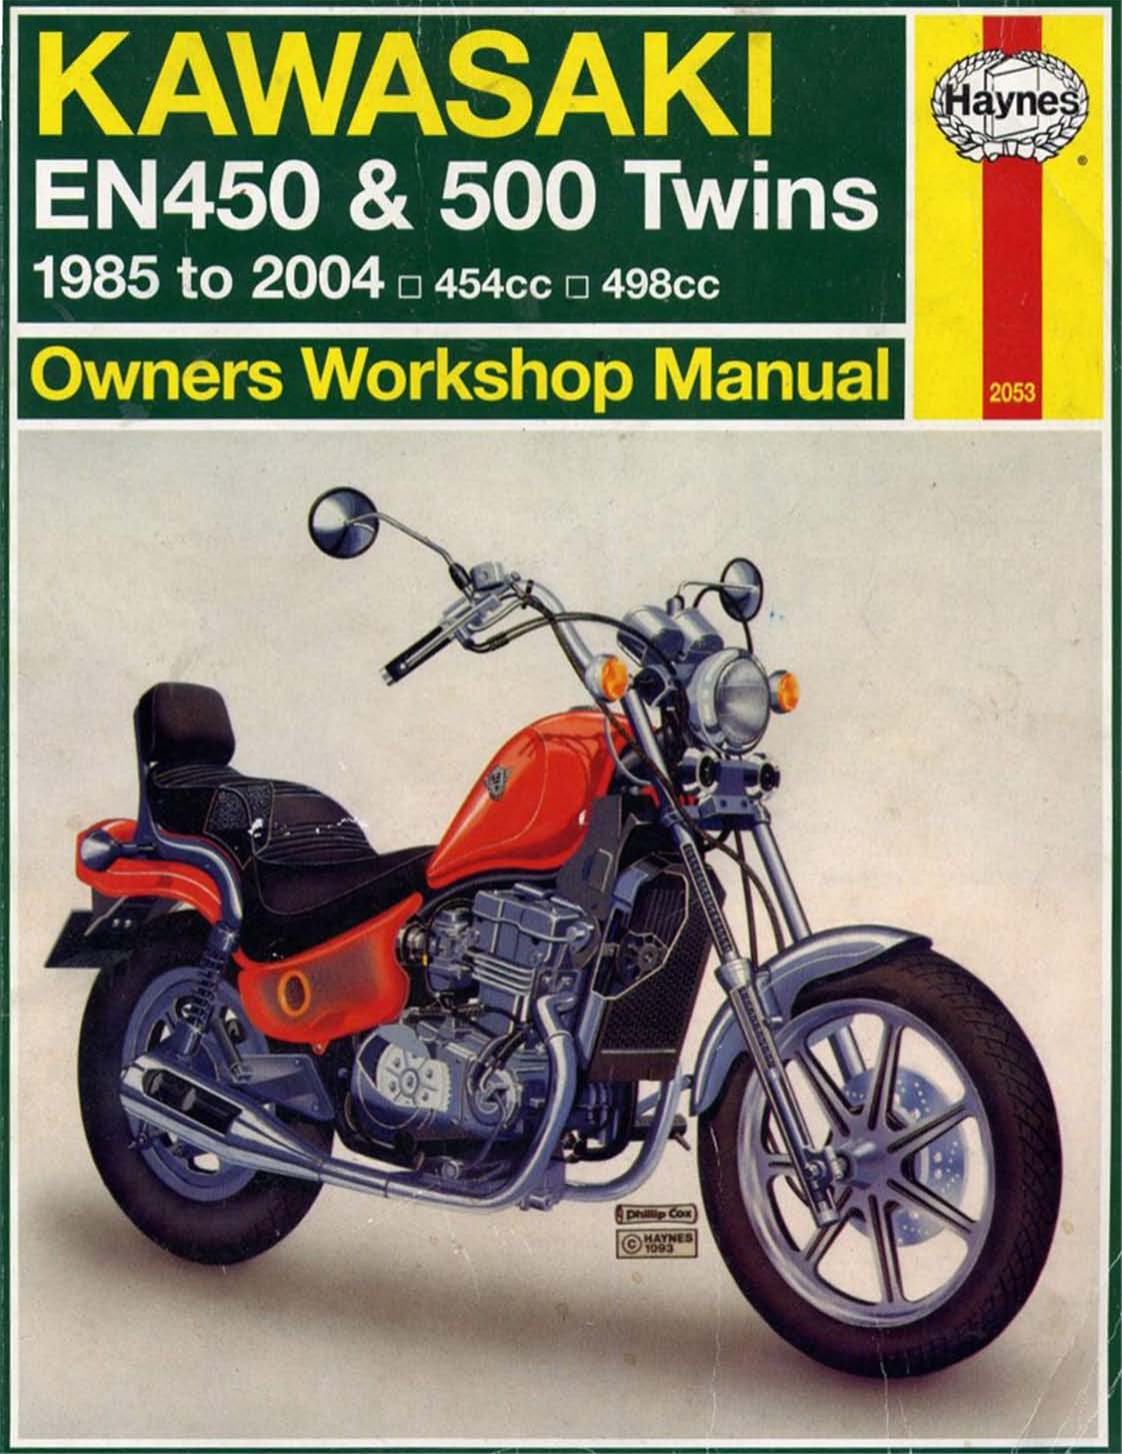 1985-2004 Kawasaki Vulcan EN450 LTD, EN500 Vulcan owners workshop manual Preview image 1